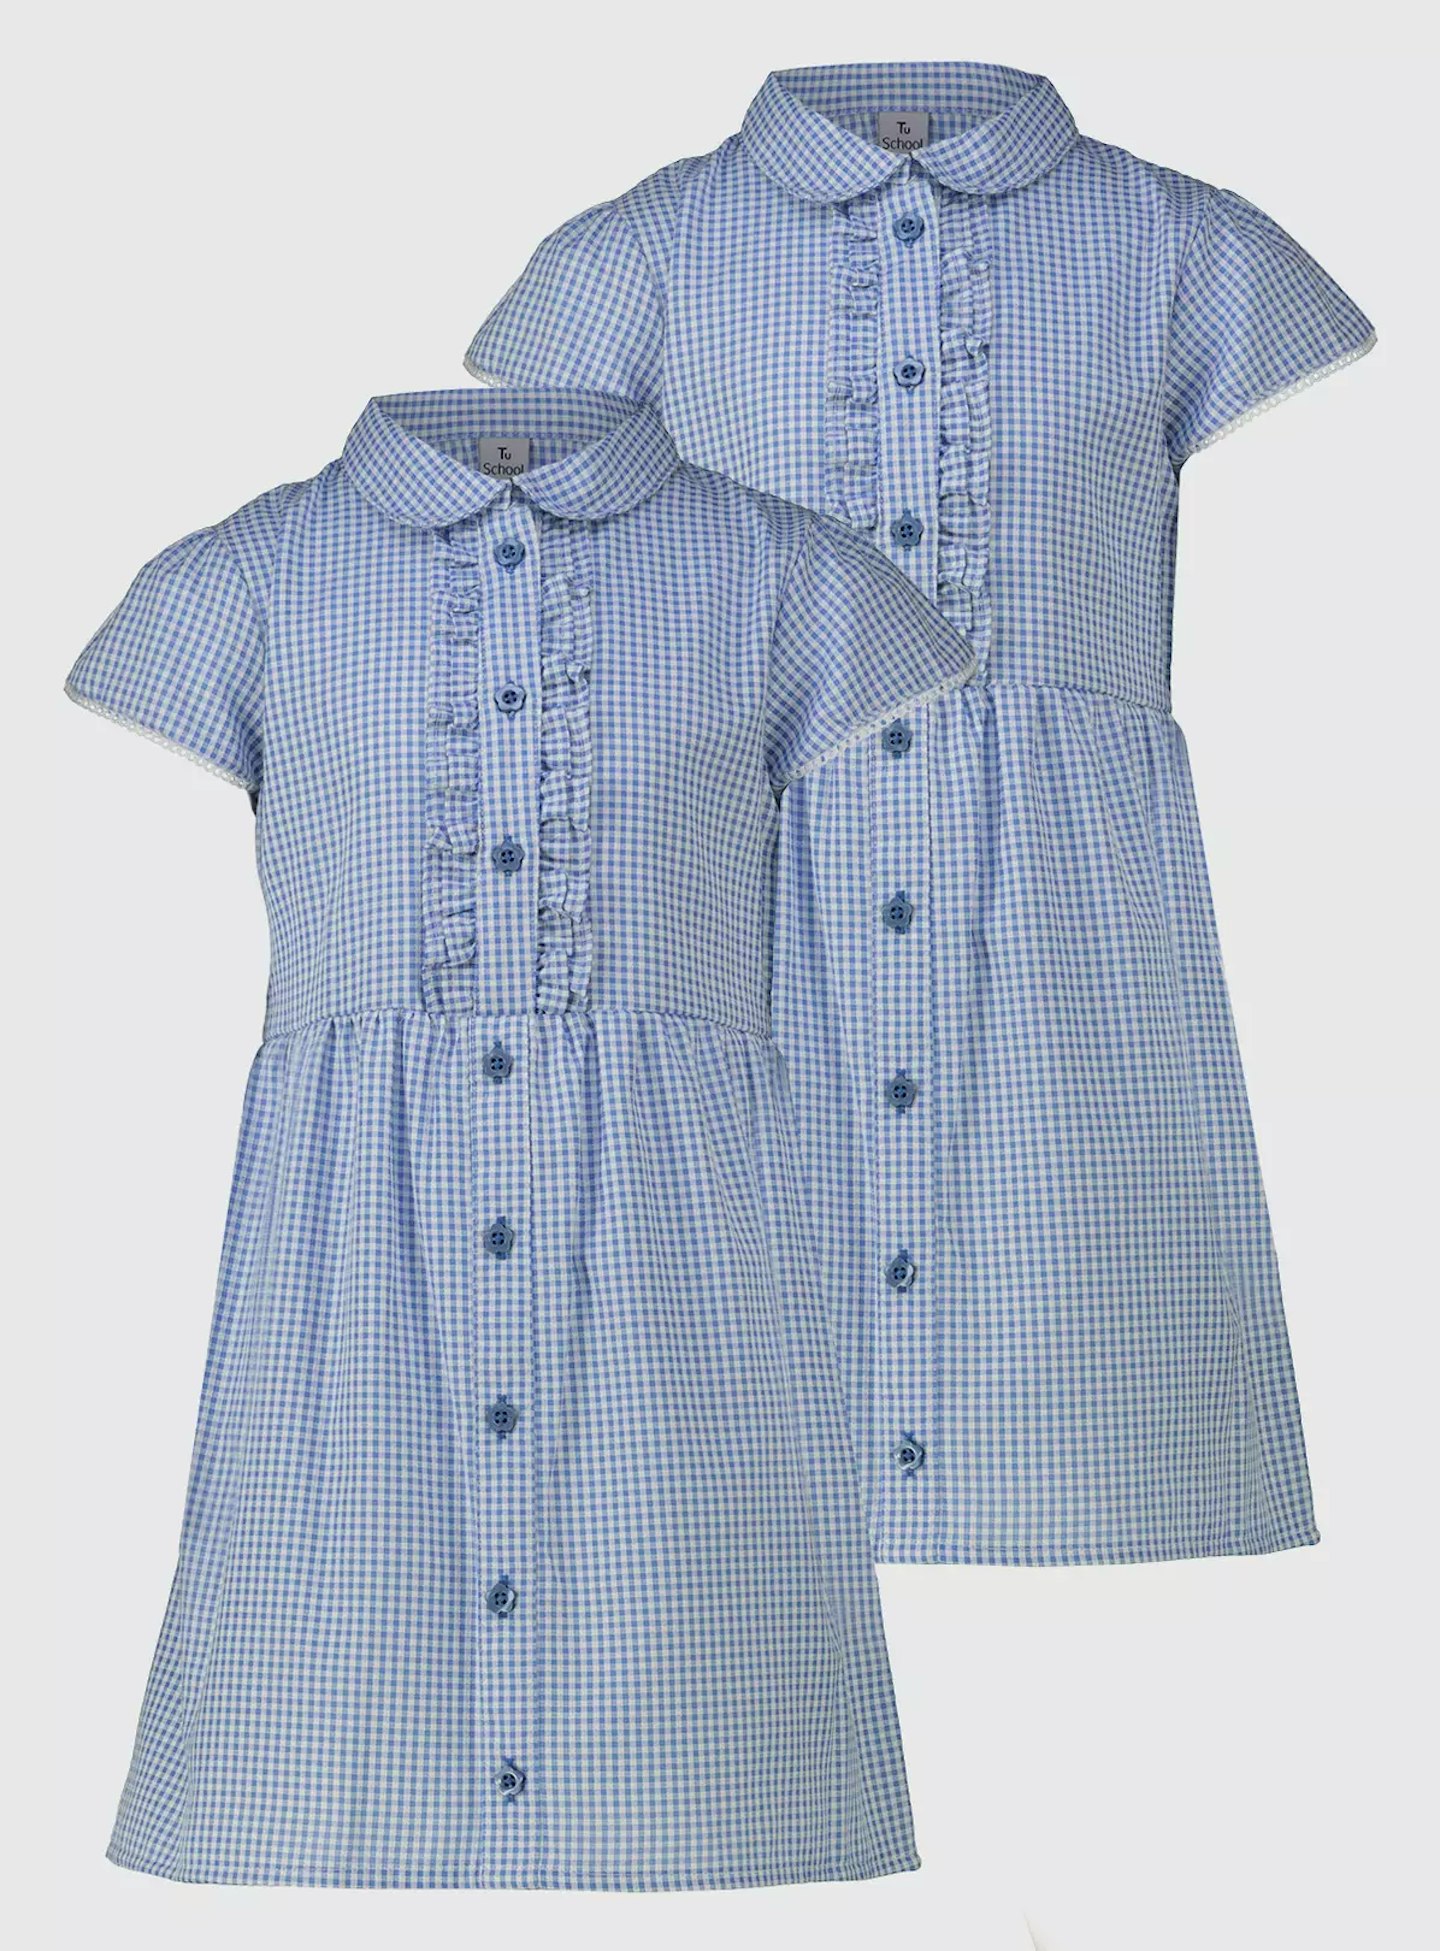 argos school dresses 